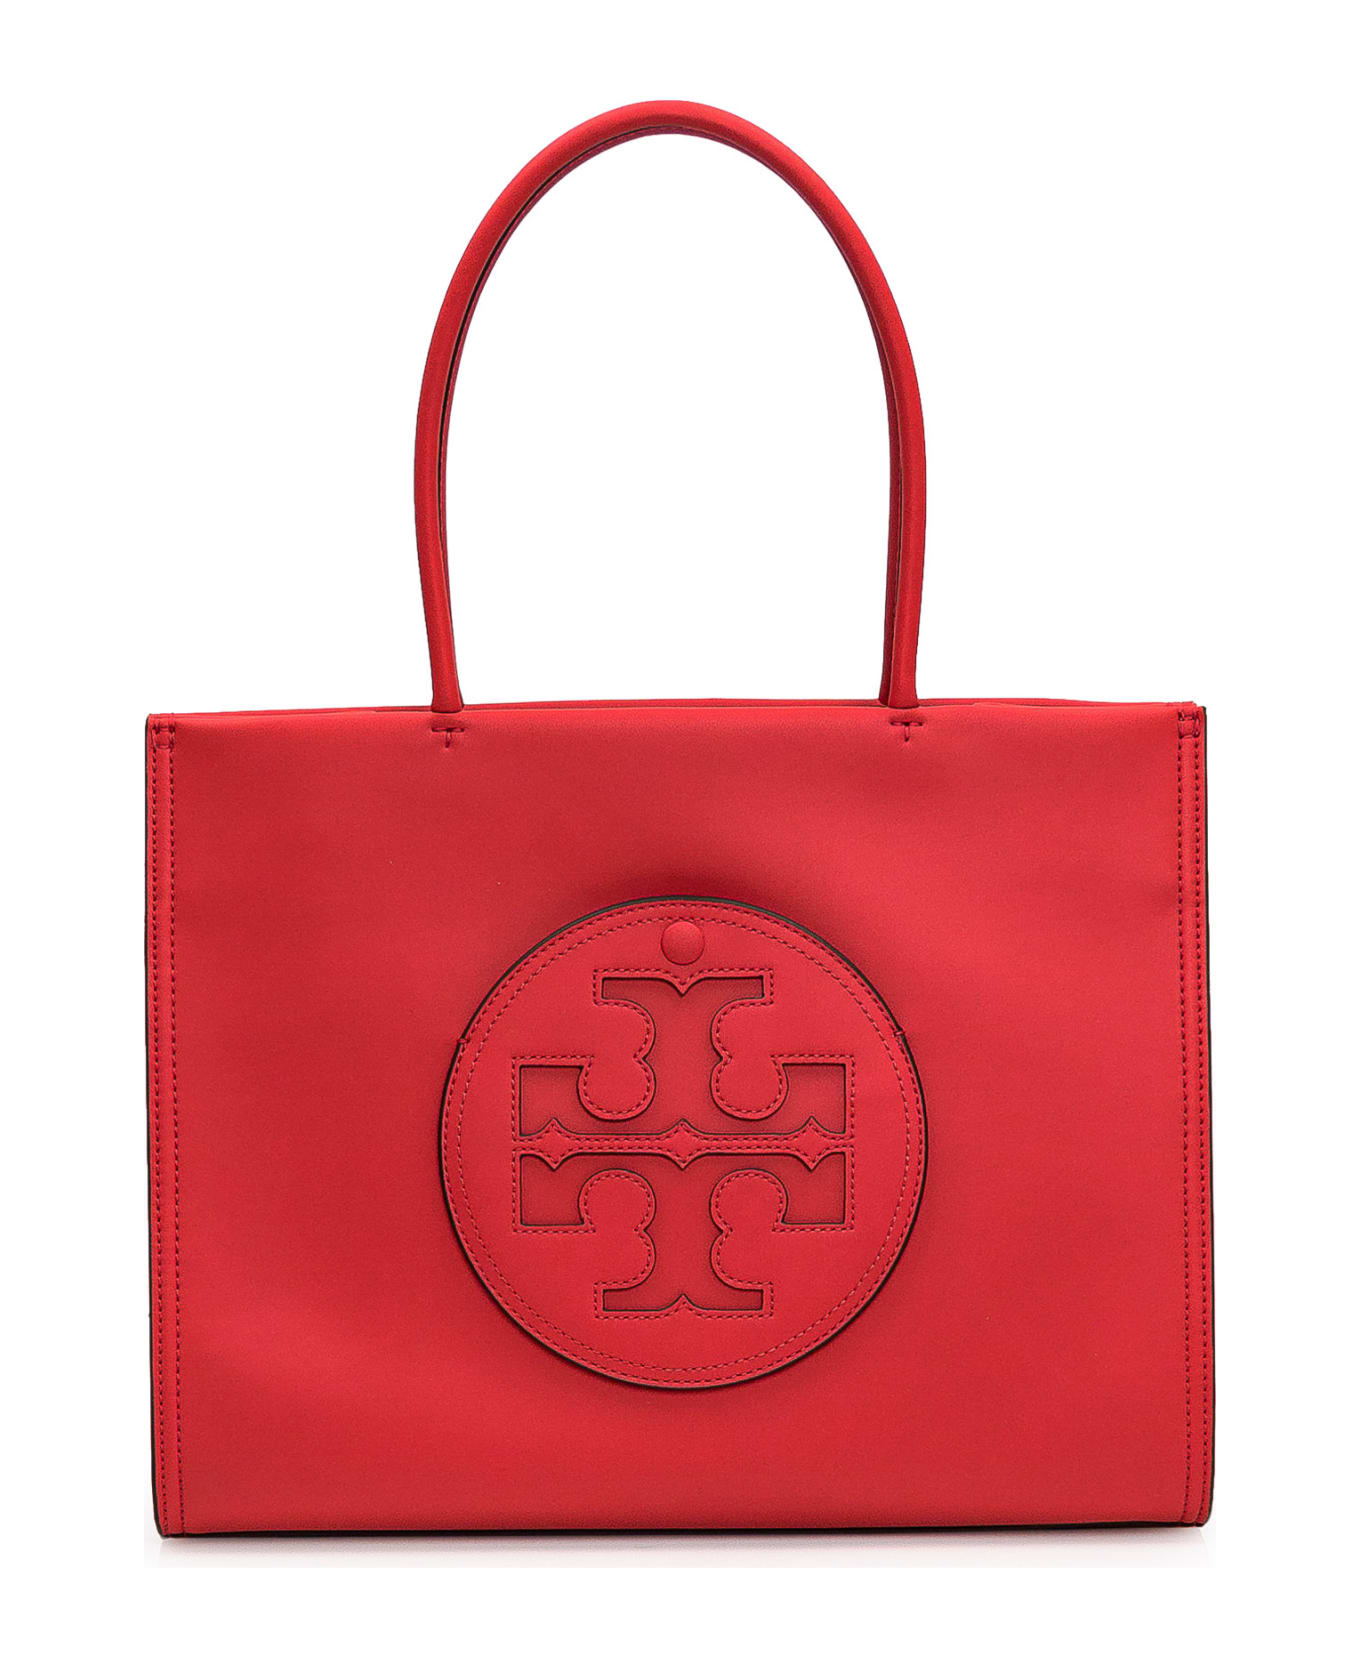 Tory Burch Shopping Bag Ella - POPPY RED トートバッグ